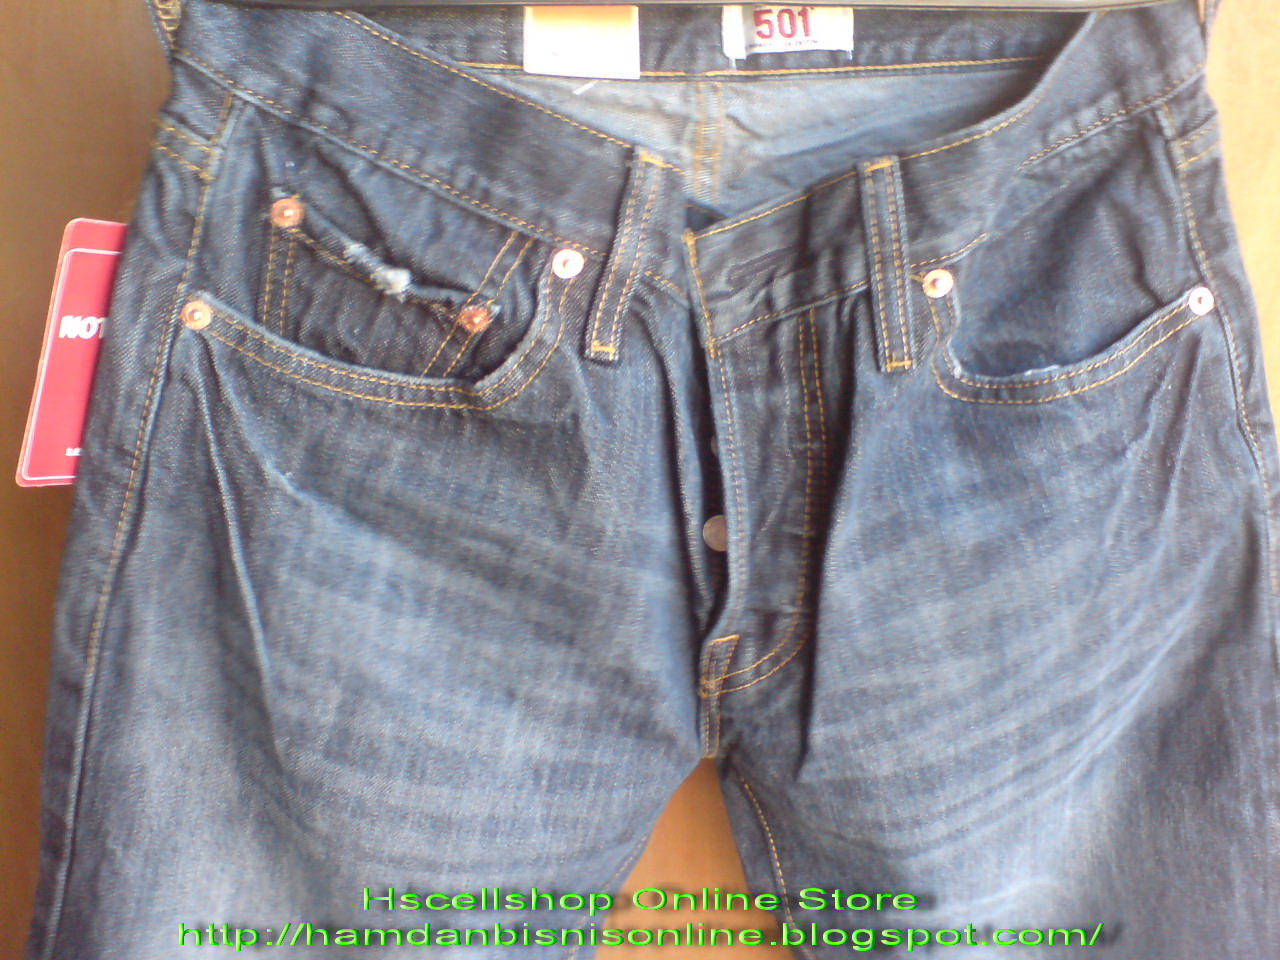  Celana  Jeans  Levis  501 USA Original  Import Code CL001 